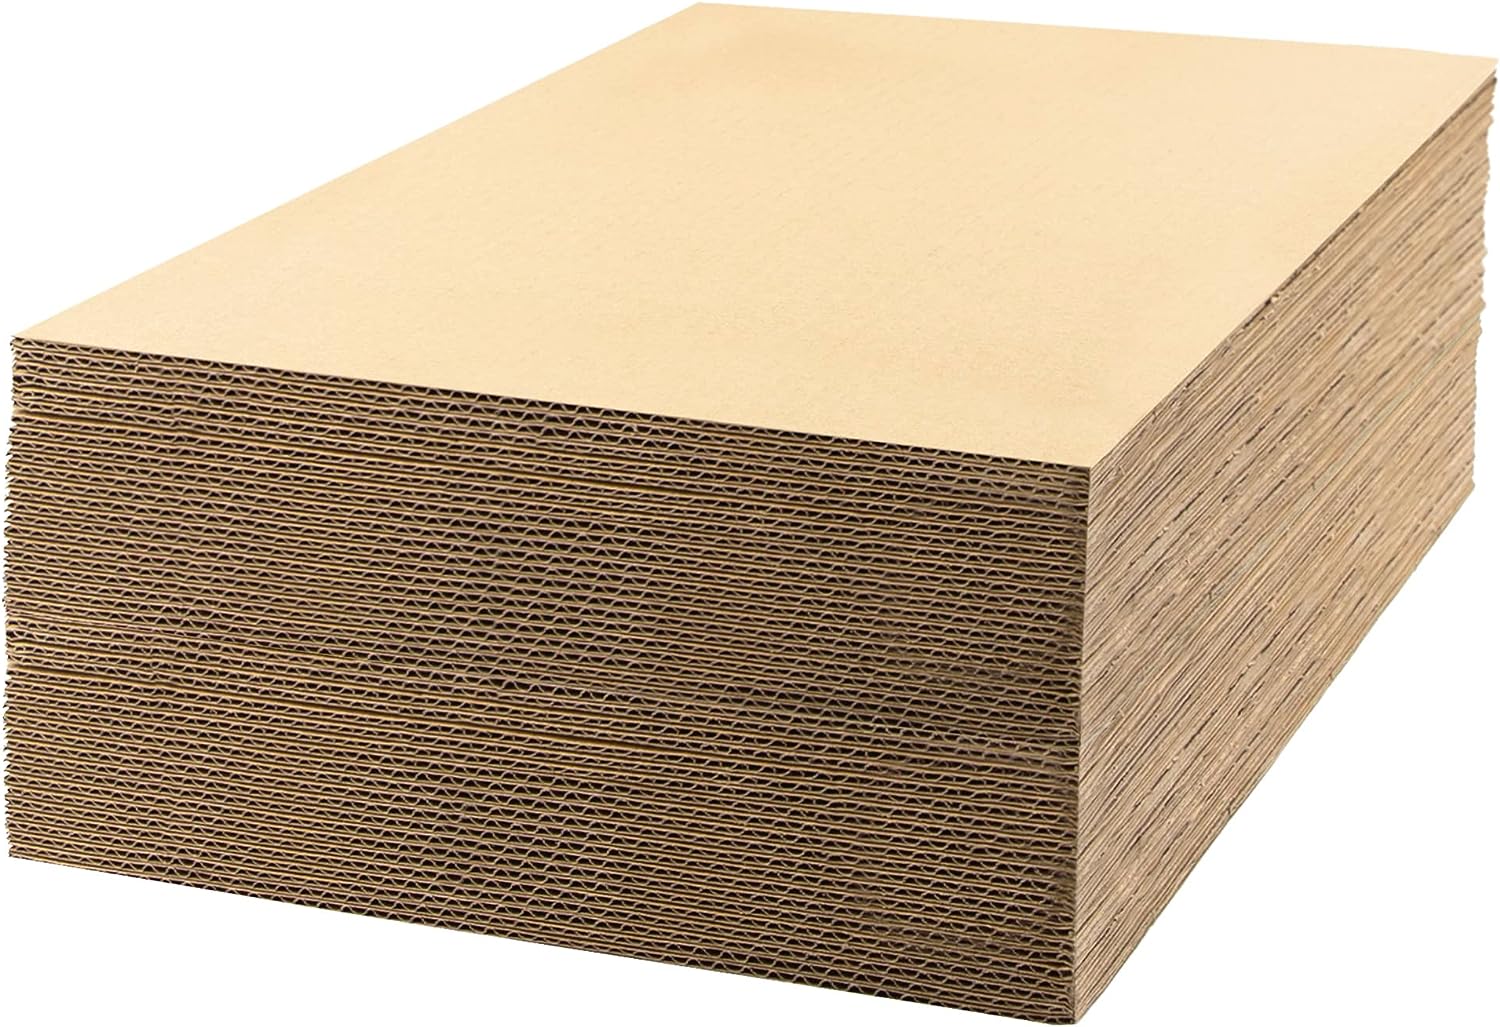  Corrugated Cardboard Roll, 24 x 33', Single Face, A